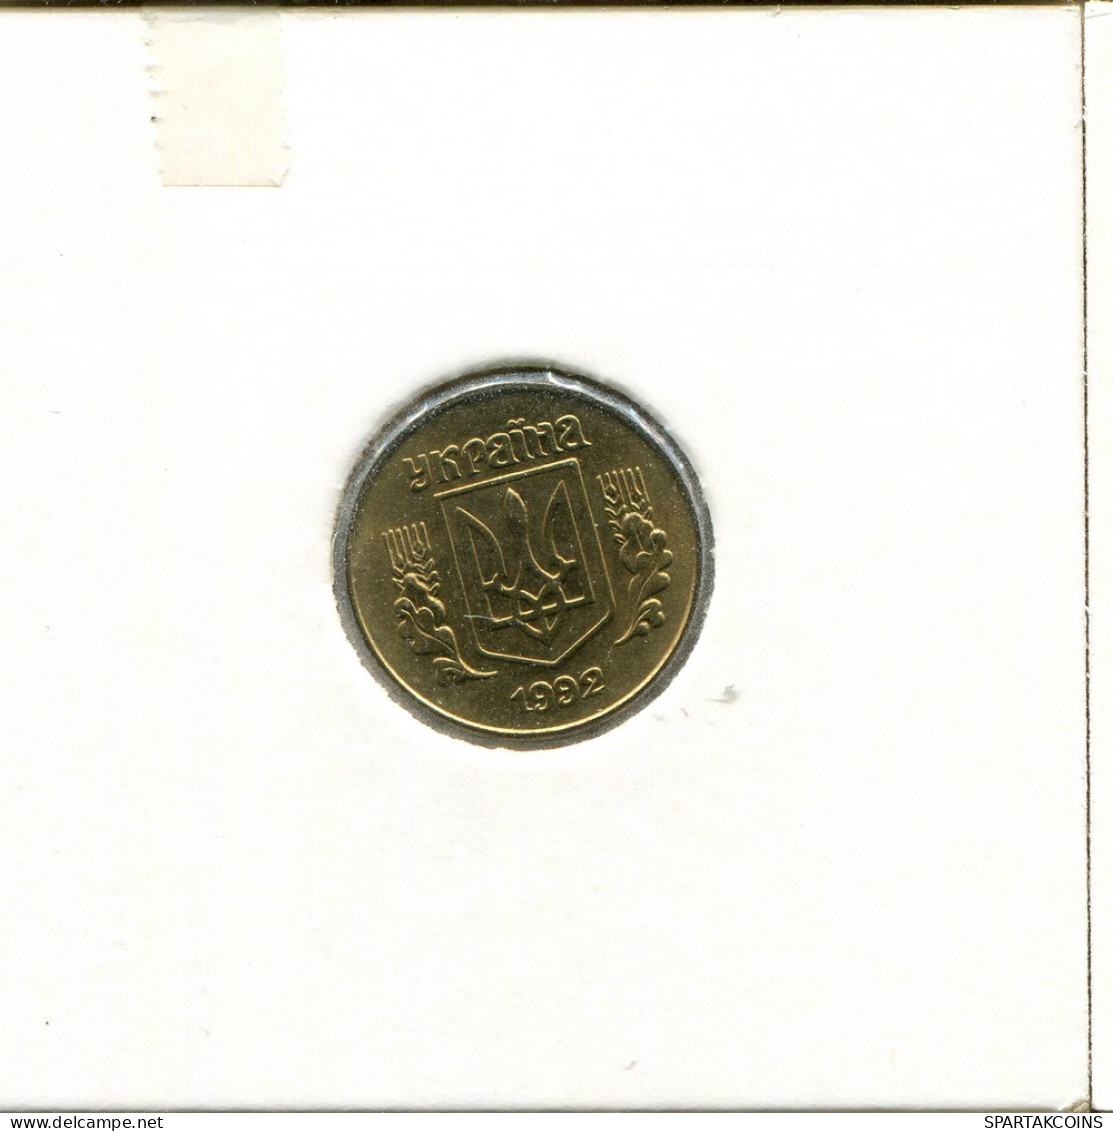 10 Kopiiok 1992 UKRAINE Coin #AS062.U.A - Ucrania